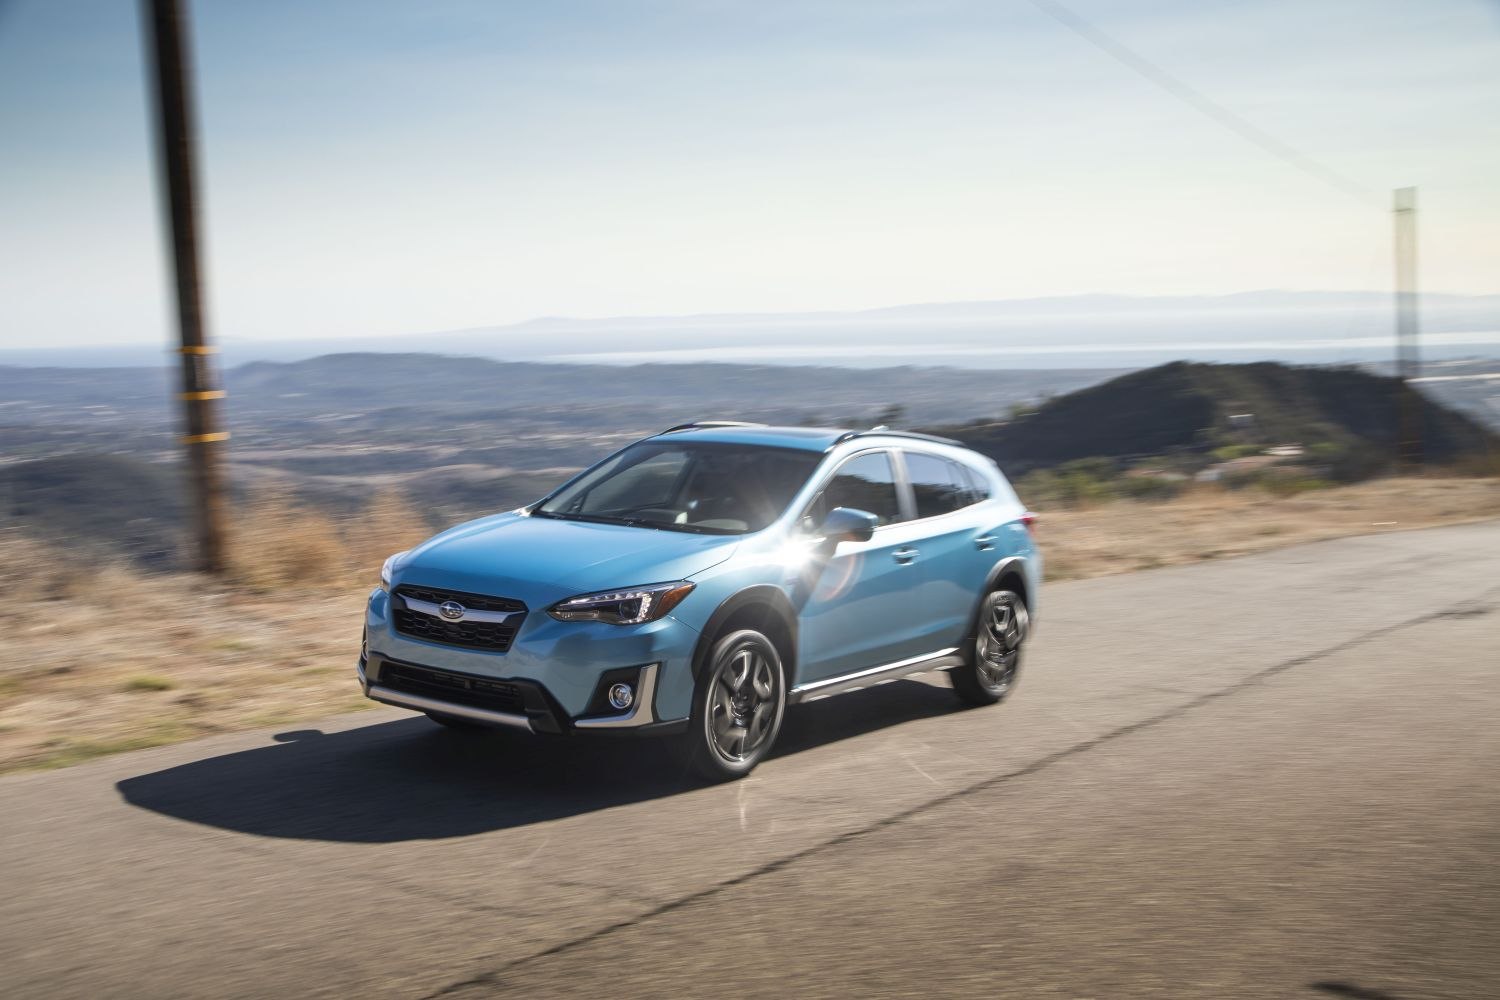 Subaru Crosstrek technical specifications and fuel economy